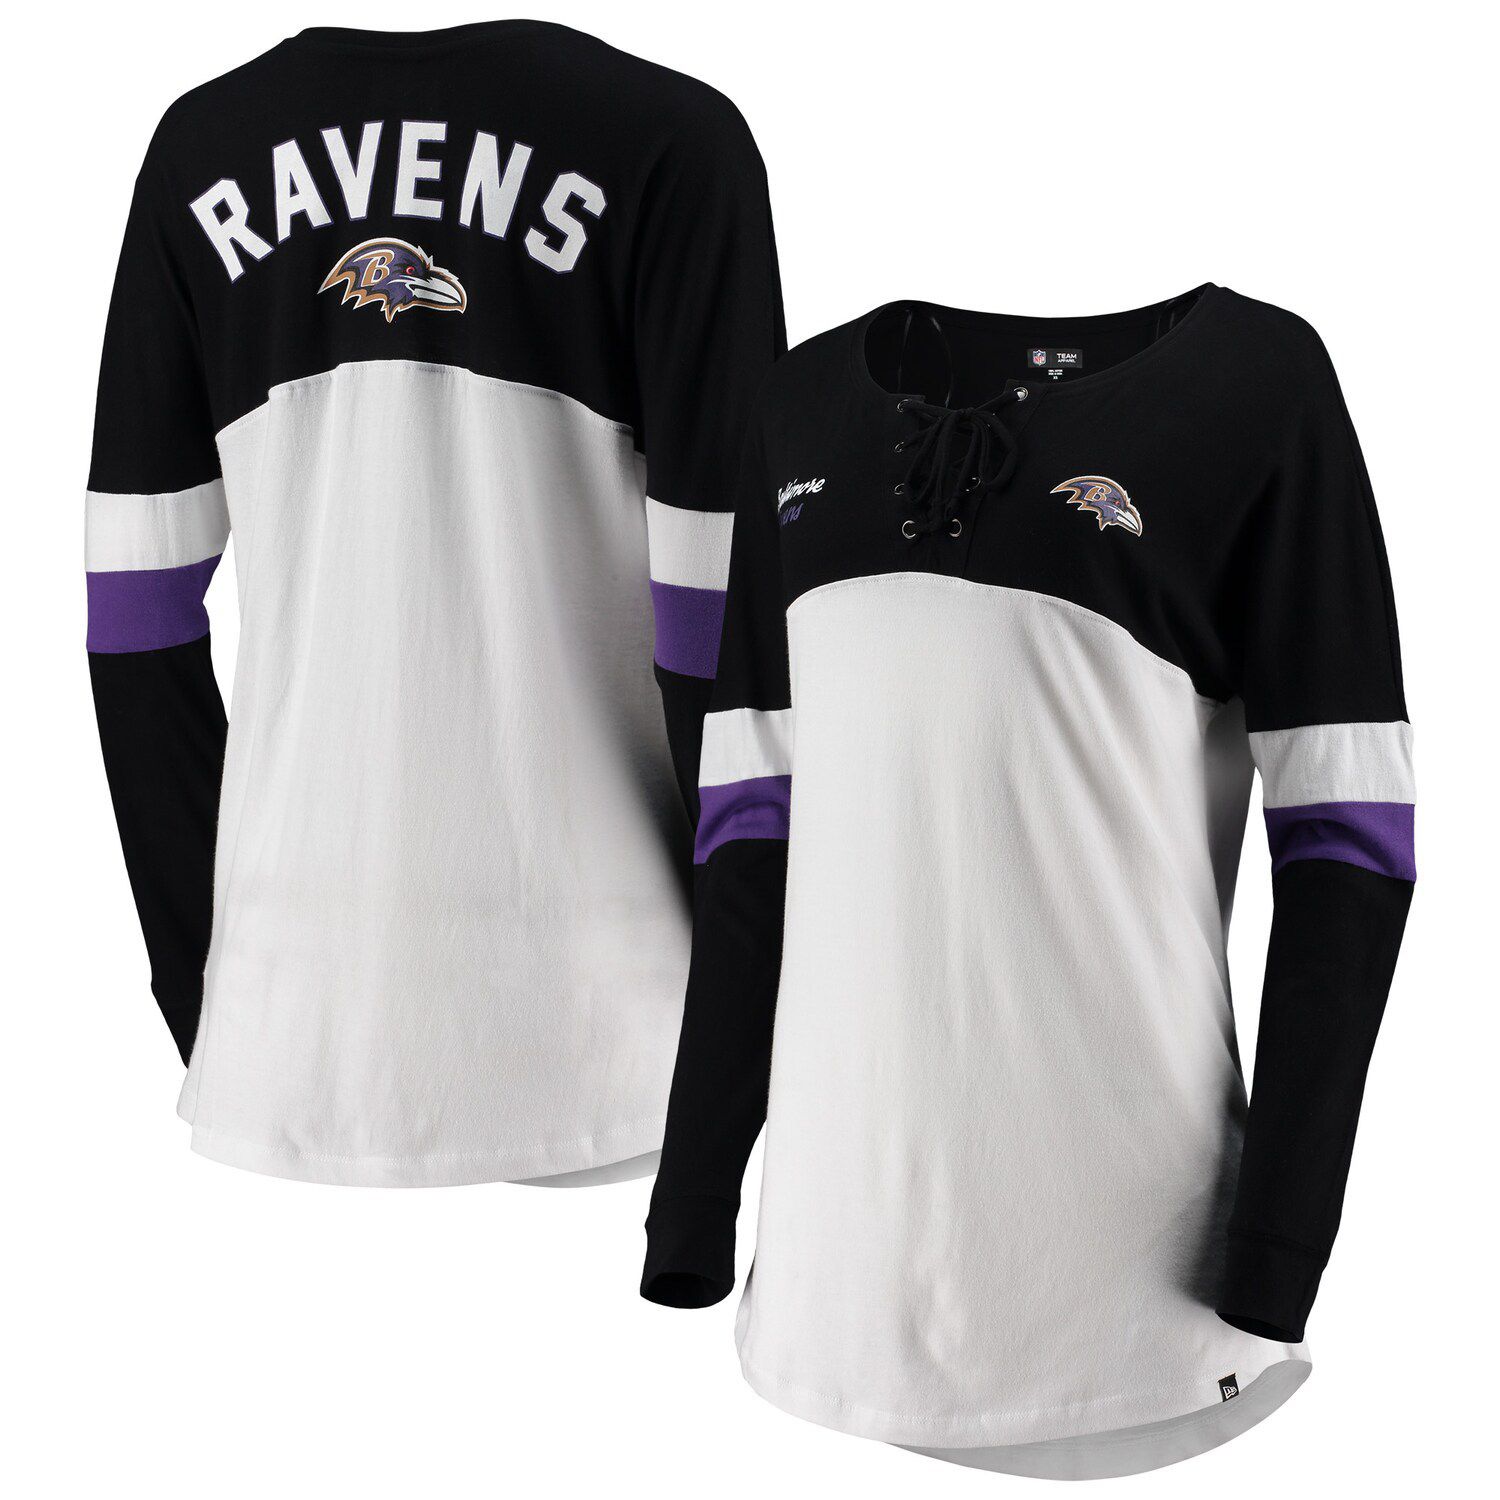 Ravens & Bohs & Crabs & O's Helvetica (Black) / Long Sleeve Shirt